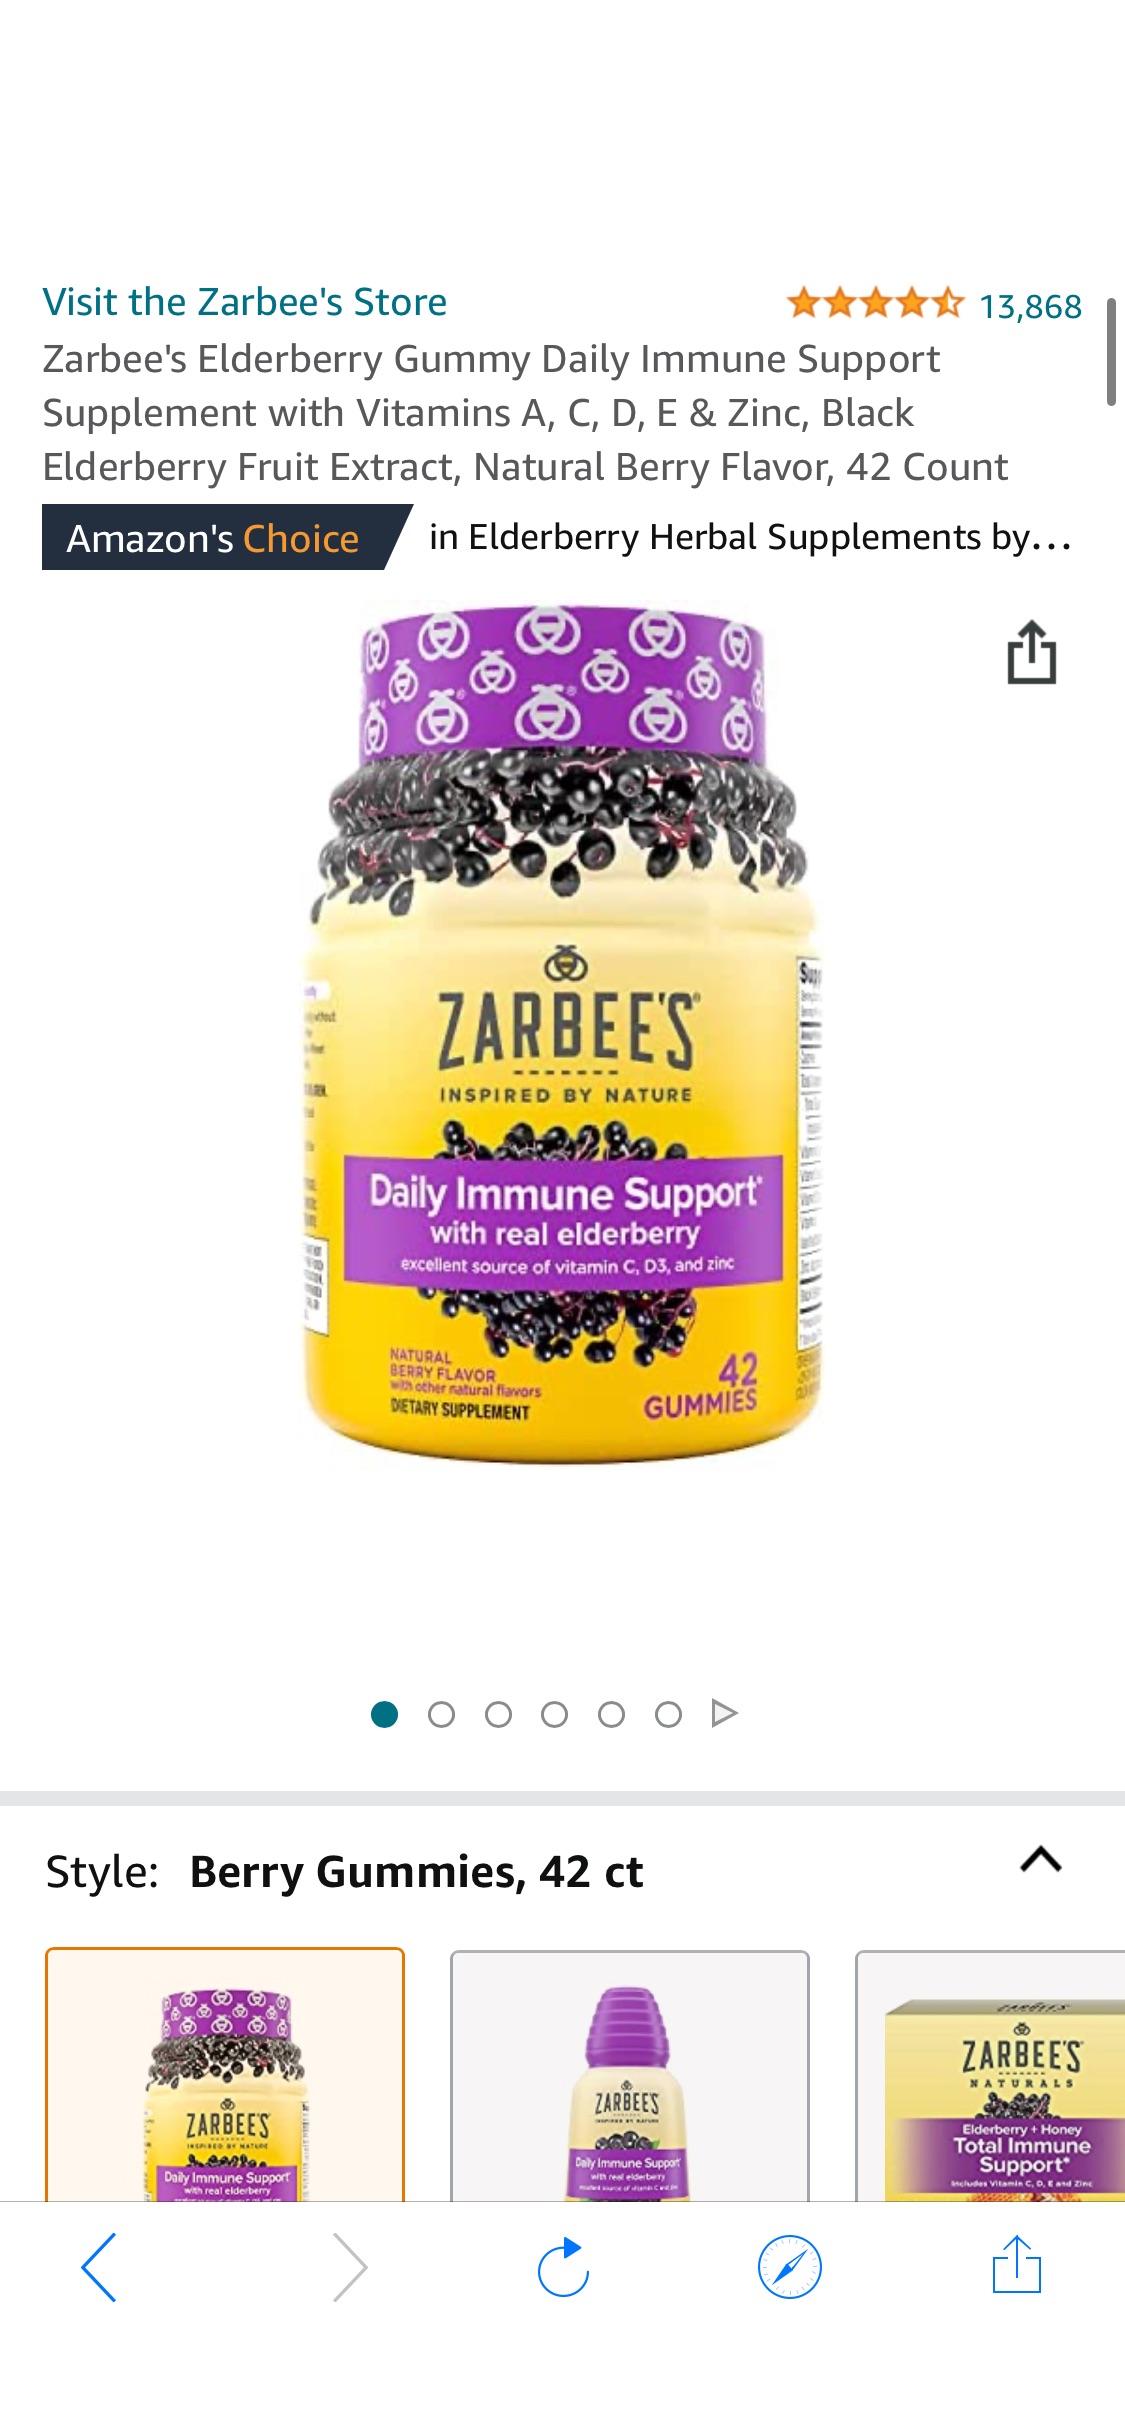 Amazon.com: Zarbee's Elderberry Gummy Daily Immune Support Supplement with Vitamins A, C, D, E & Zinc, Black Elderberry Fruit Extract, Natural Berry Flavor, 42 Count维生素软糖